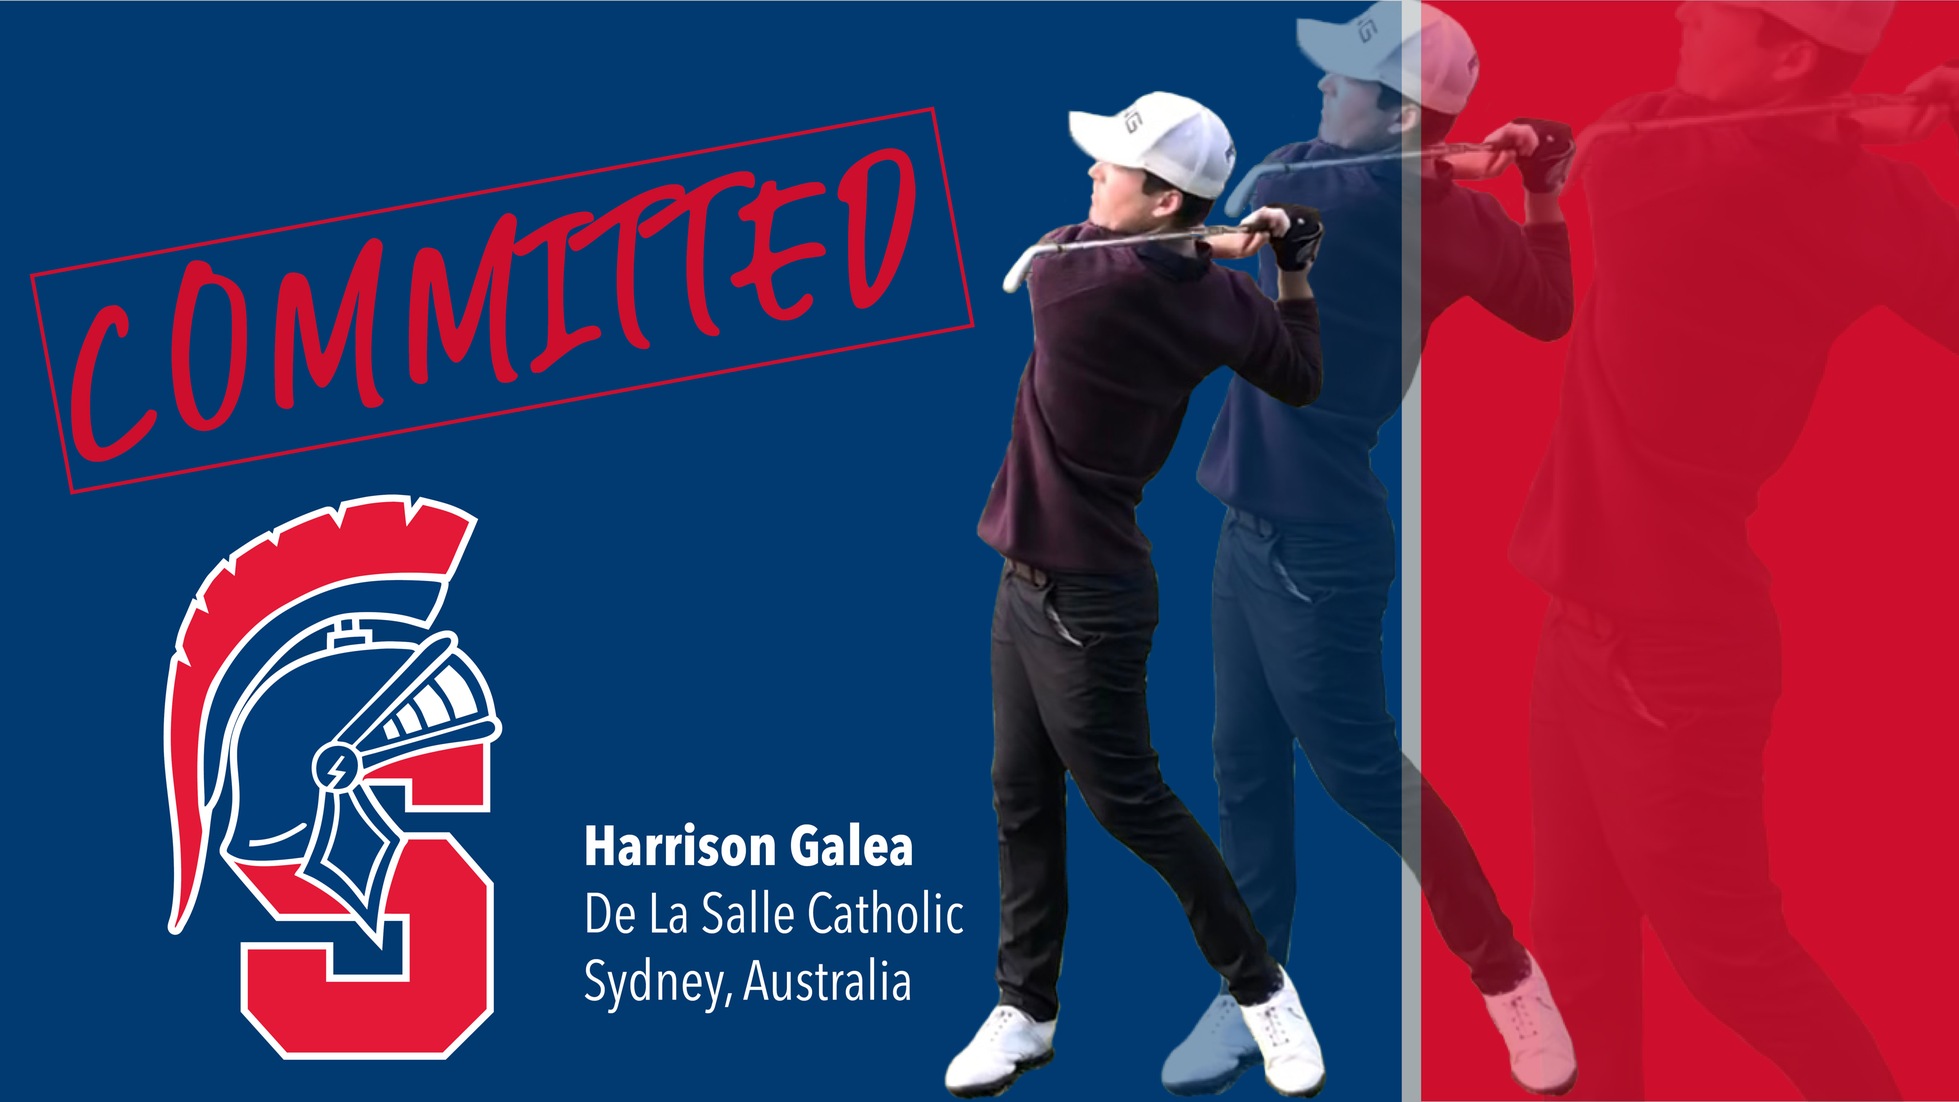 Harrison Galea of Australia signed with Southwestern for men's golf.